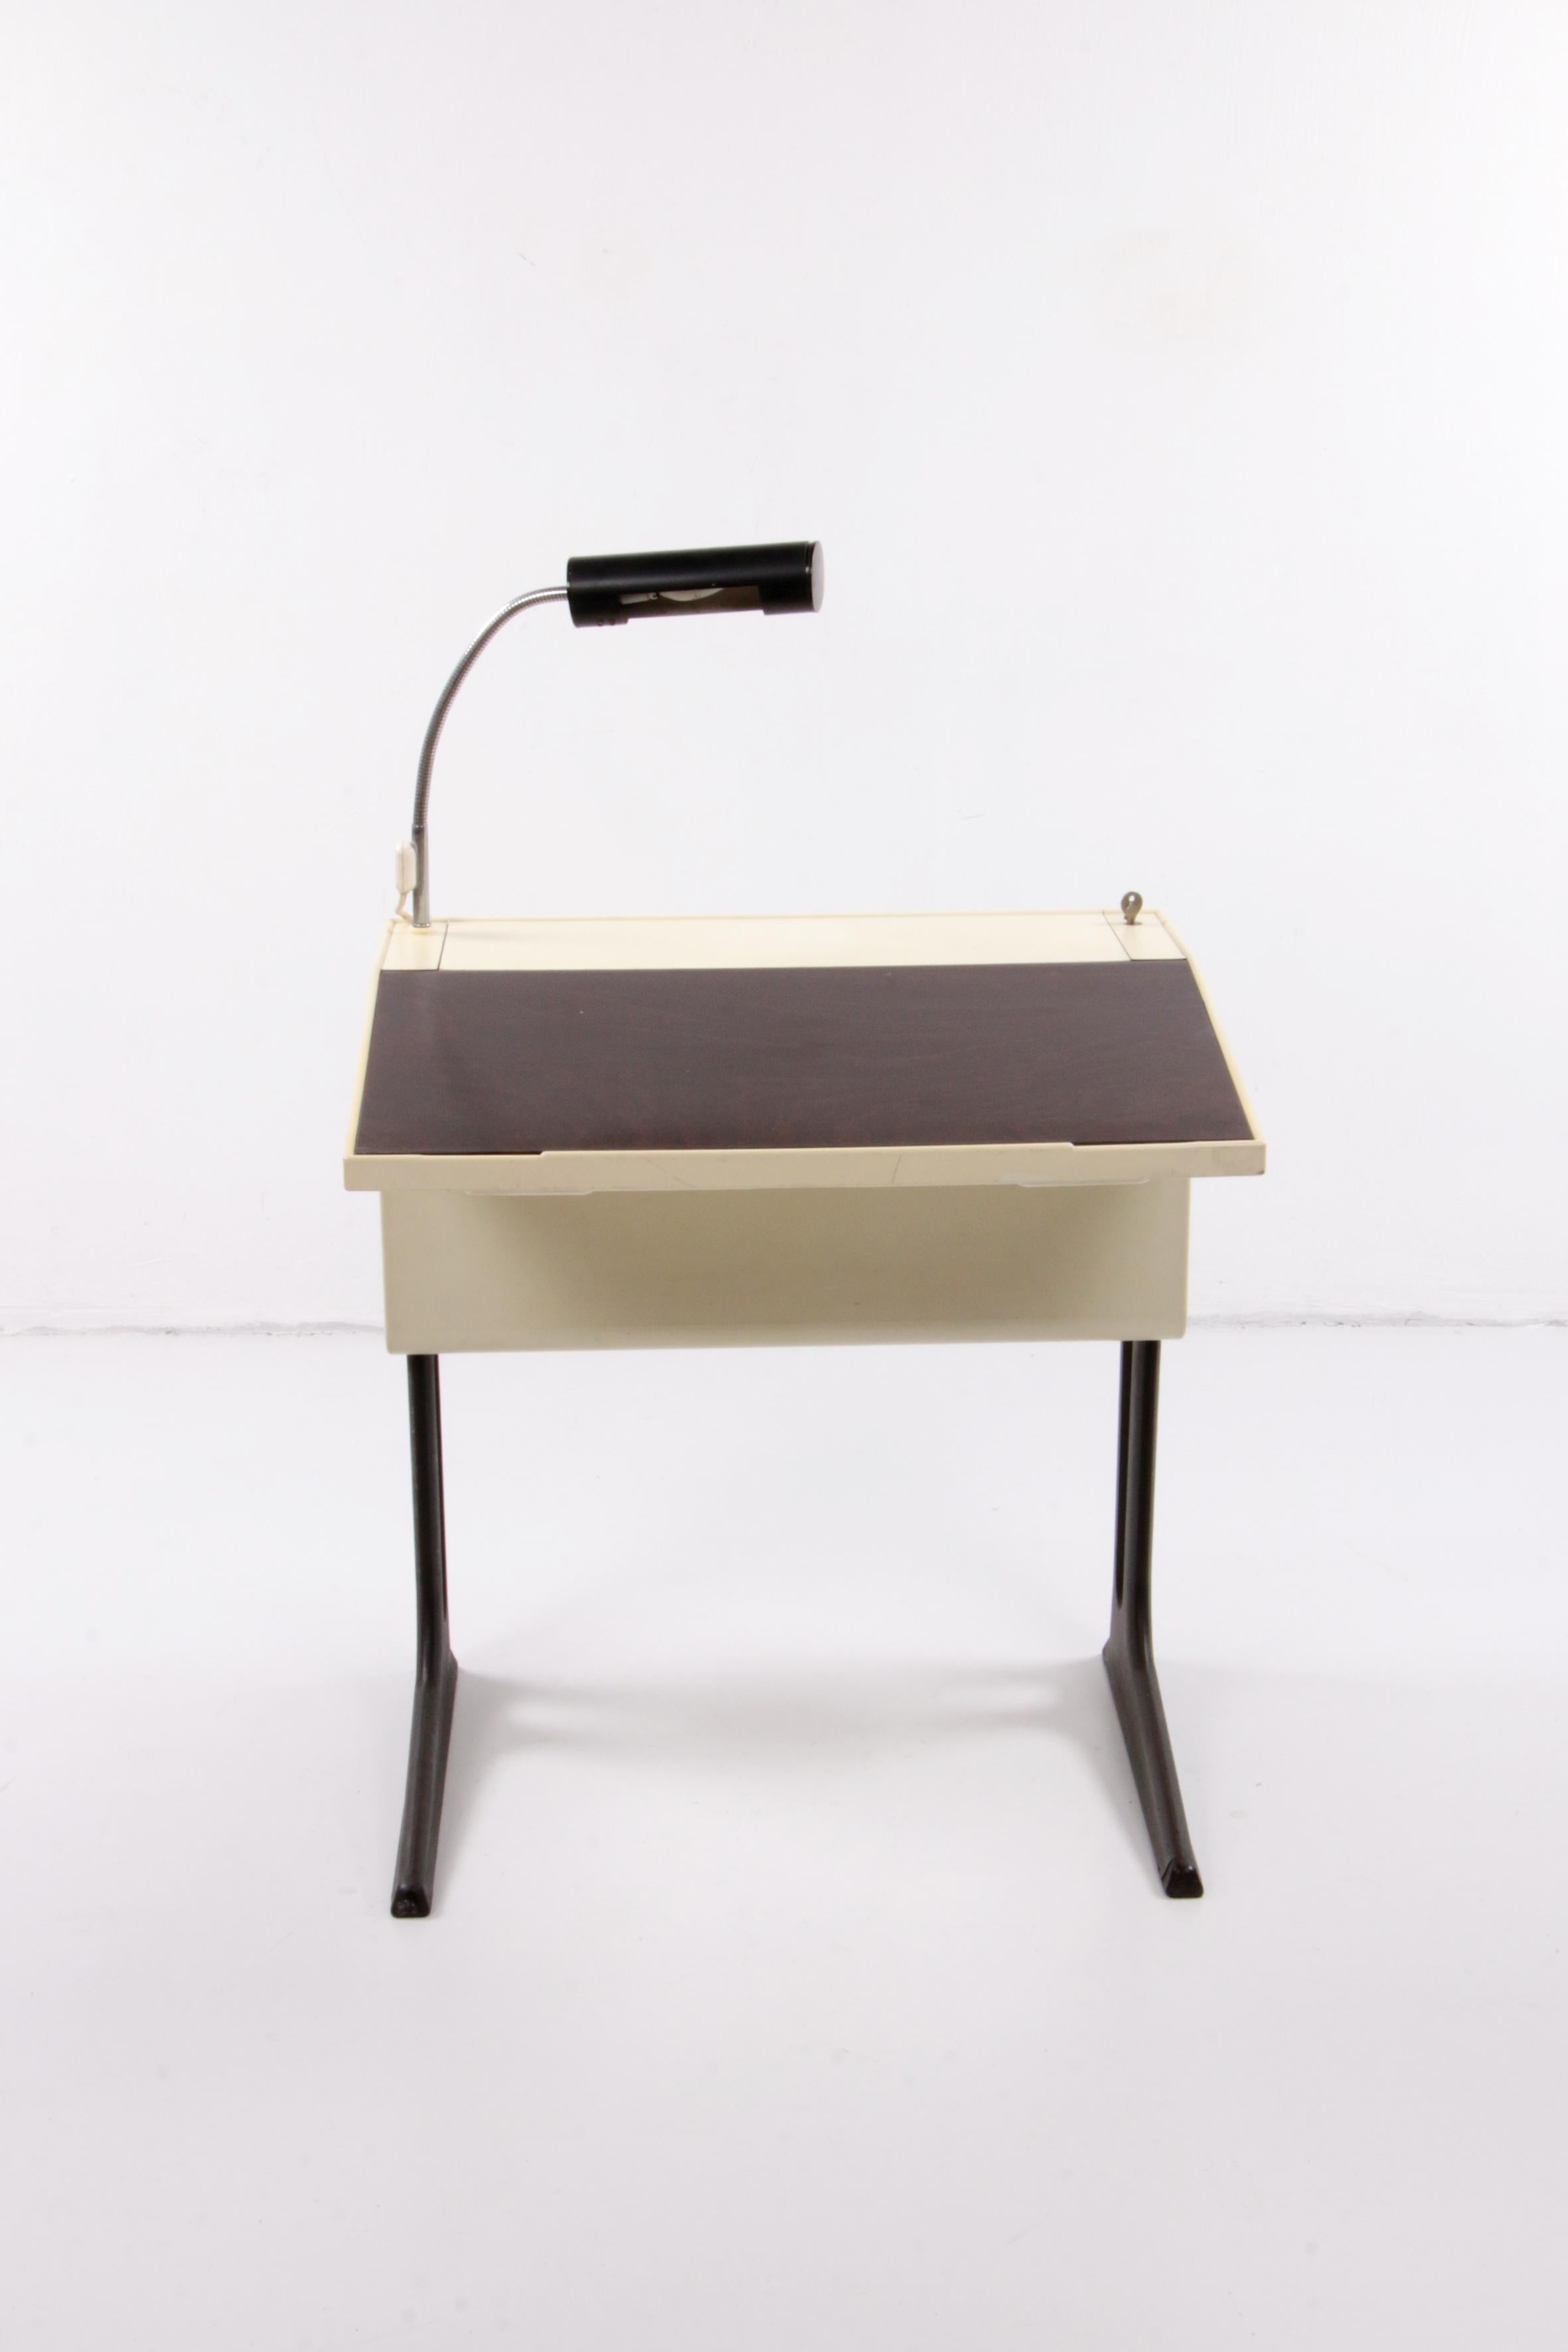 Plastic Flötotto Adjustable Desk Design by Luigi Colani, 1970, Germany